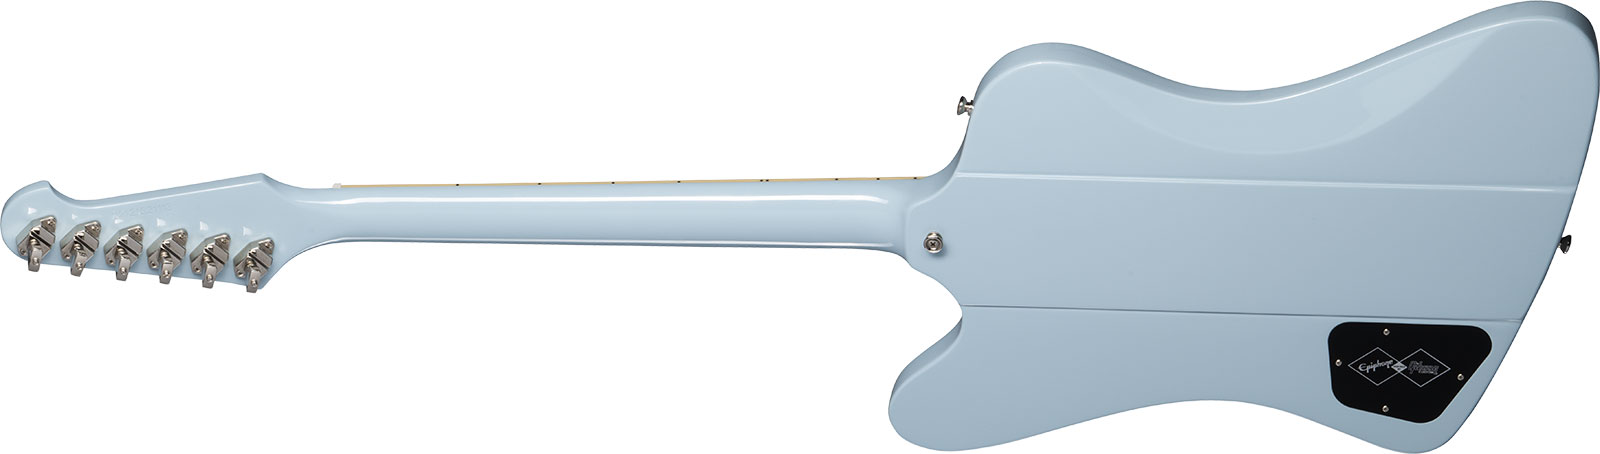 Epiphone Firebird V 1963 Maestro Vibrola Inspired By Gibson Custom 2mh Trem Lau - Frost Blue - Retro-rock elektrische gitaar - Variation 1